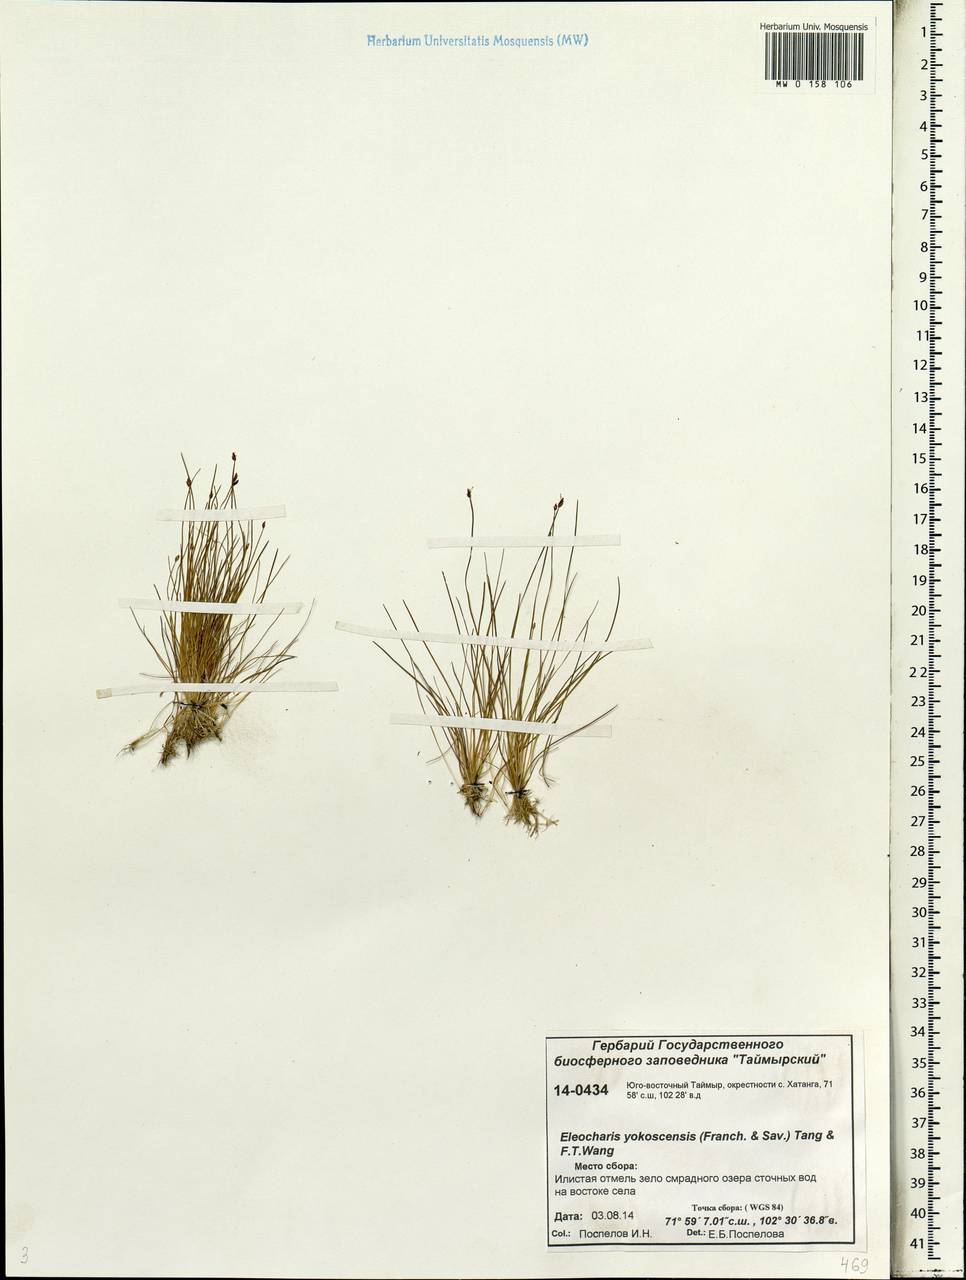 Eleocharis yokoscensis (Franch. & Sav.) Tang & F.T.Wang, Siberia, Central Siberia (S3) (Russia)